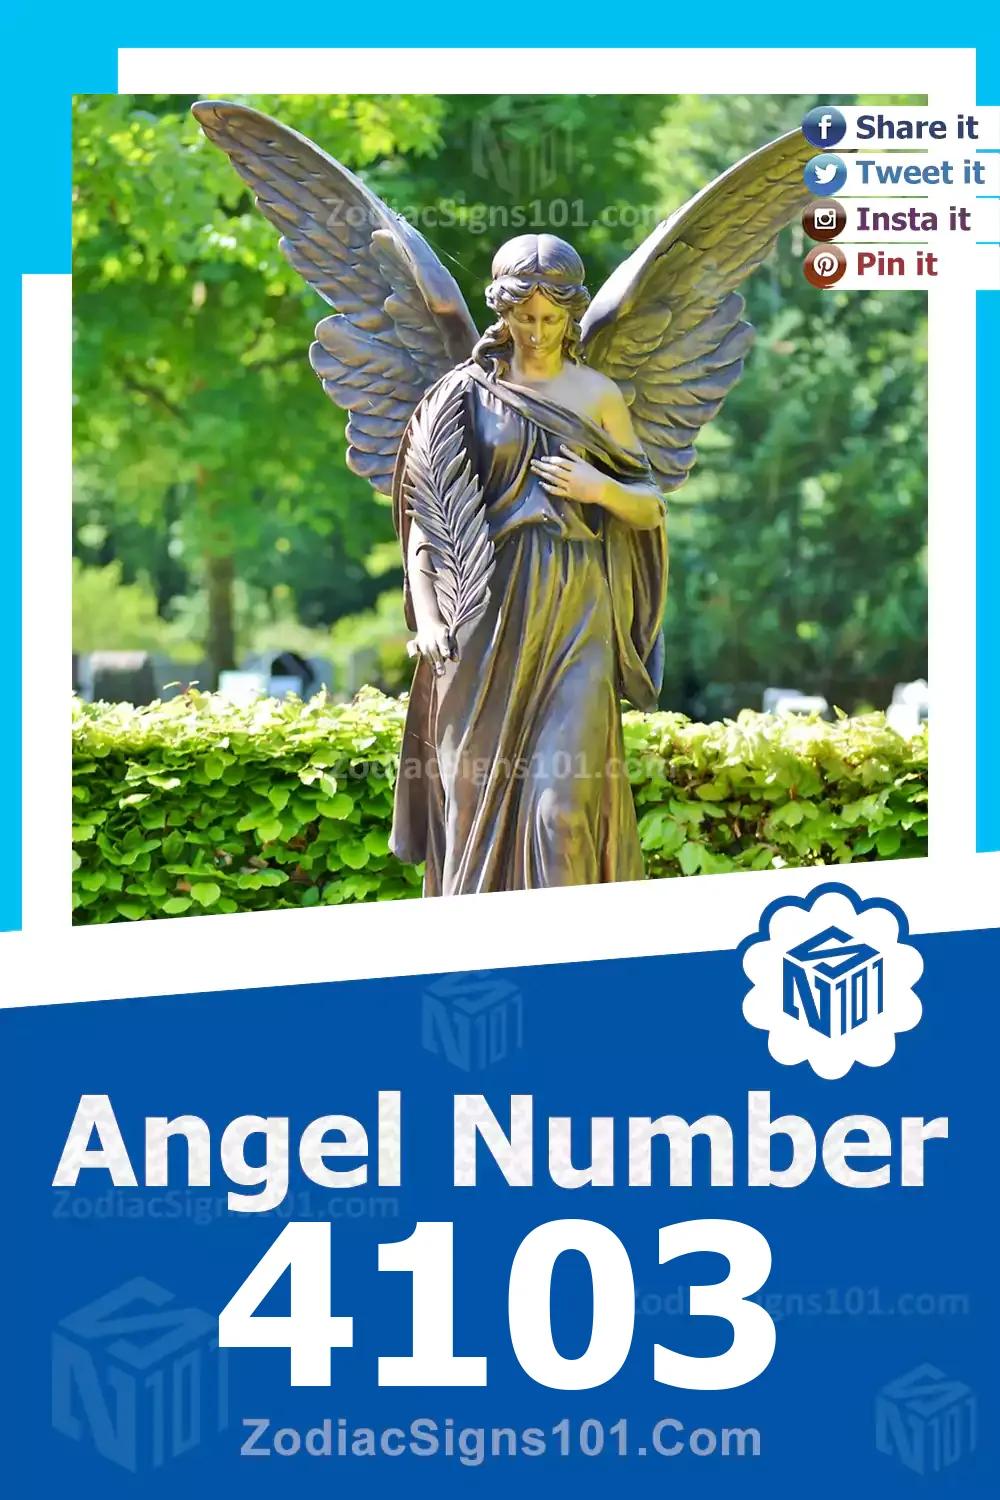 4103-Angel-Number-Meaning.jpg